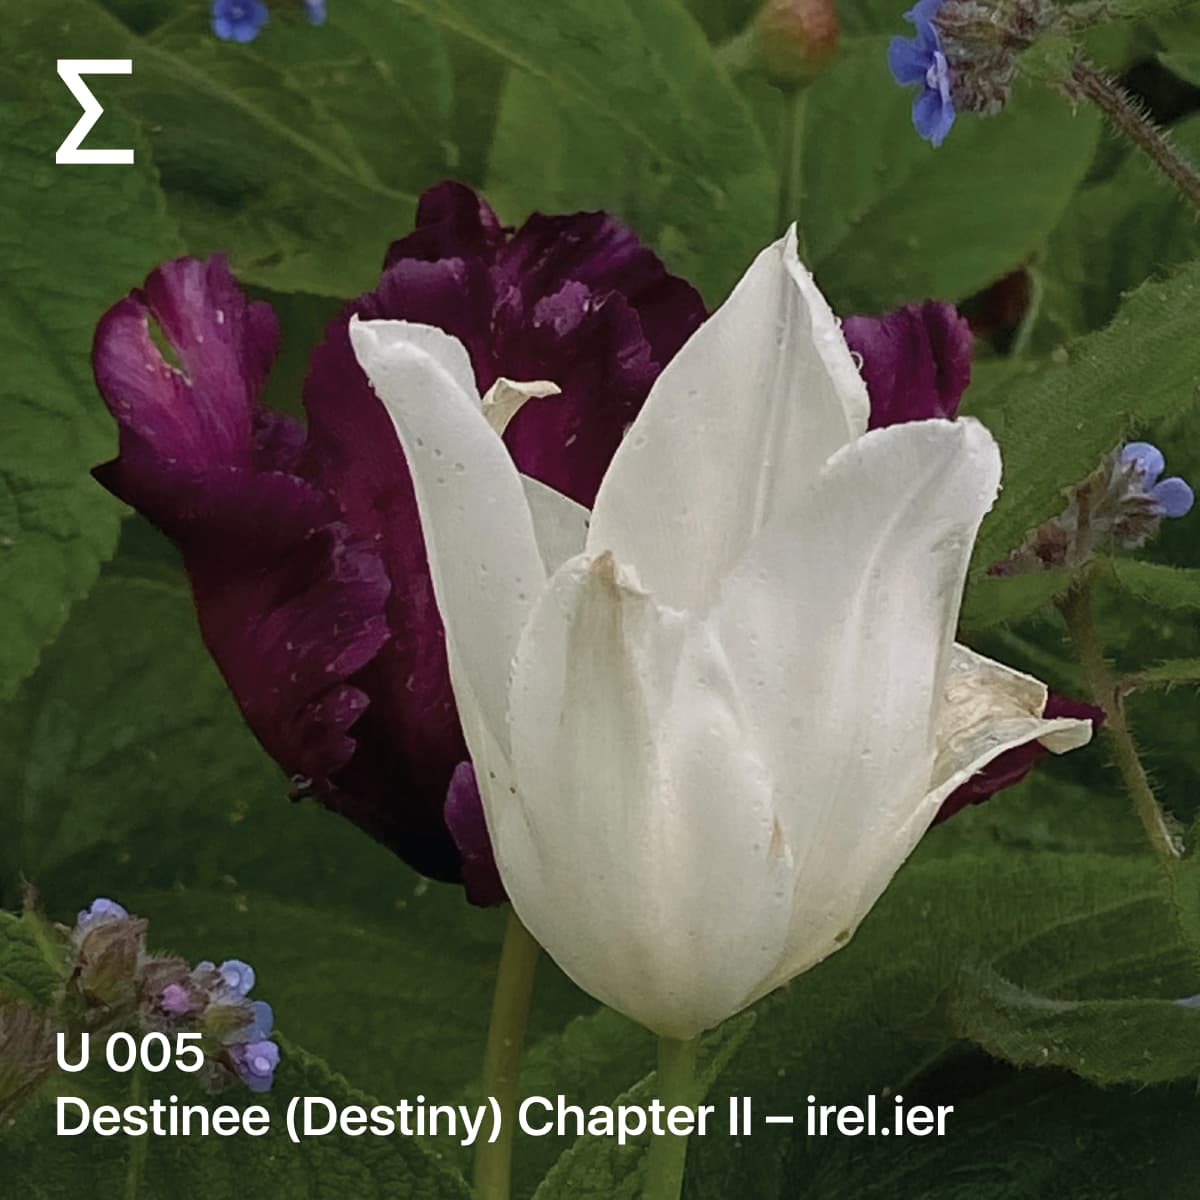 U 005 – Destinee (Destiny) Chapter II – irel.ier